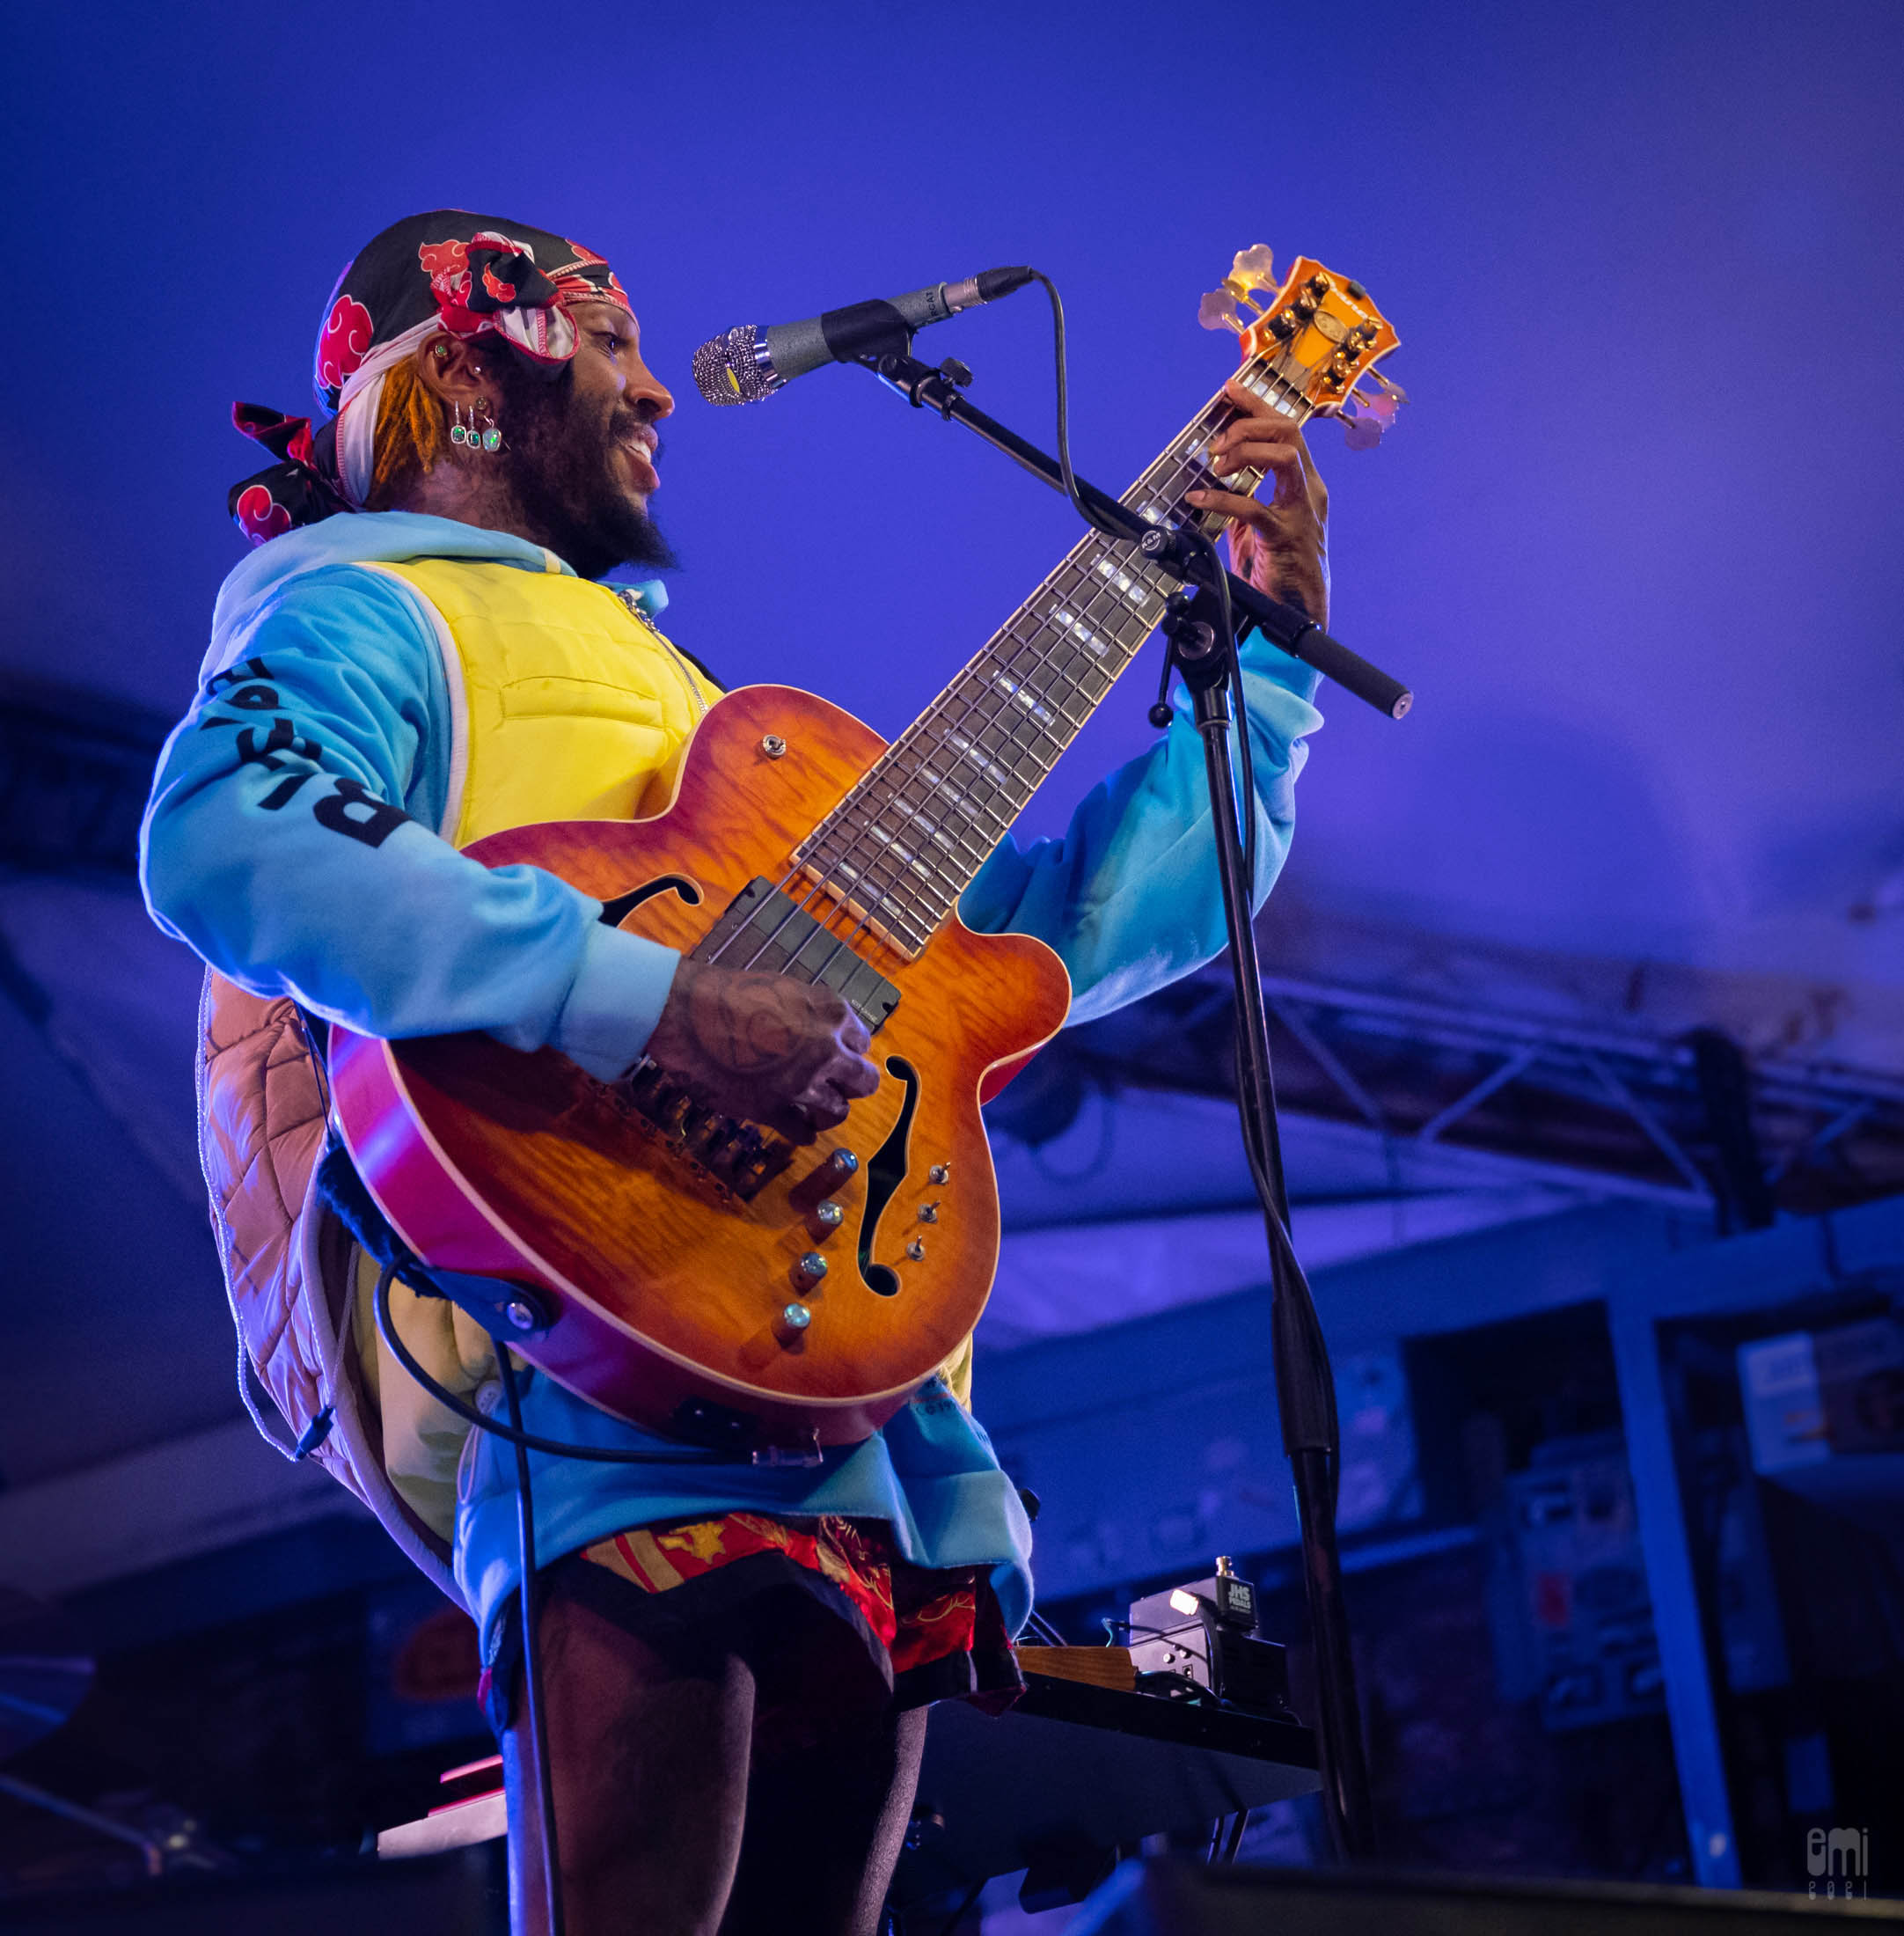 Thundercat performs at Stubb's Amphitheater for the Levitation Music Festival, Austin, TX, 2021.10.30. photo by emi 